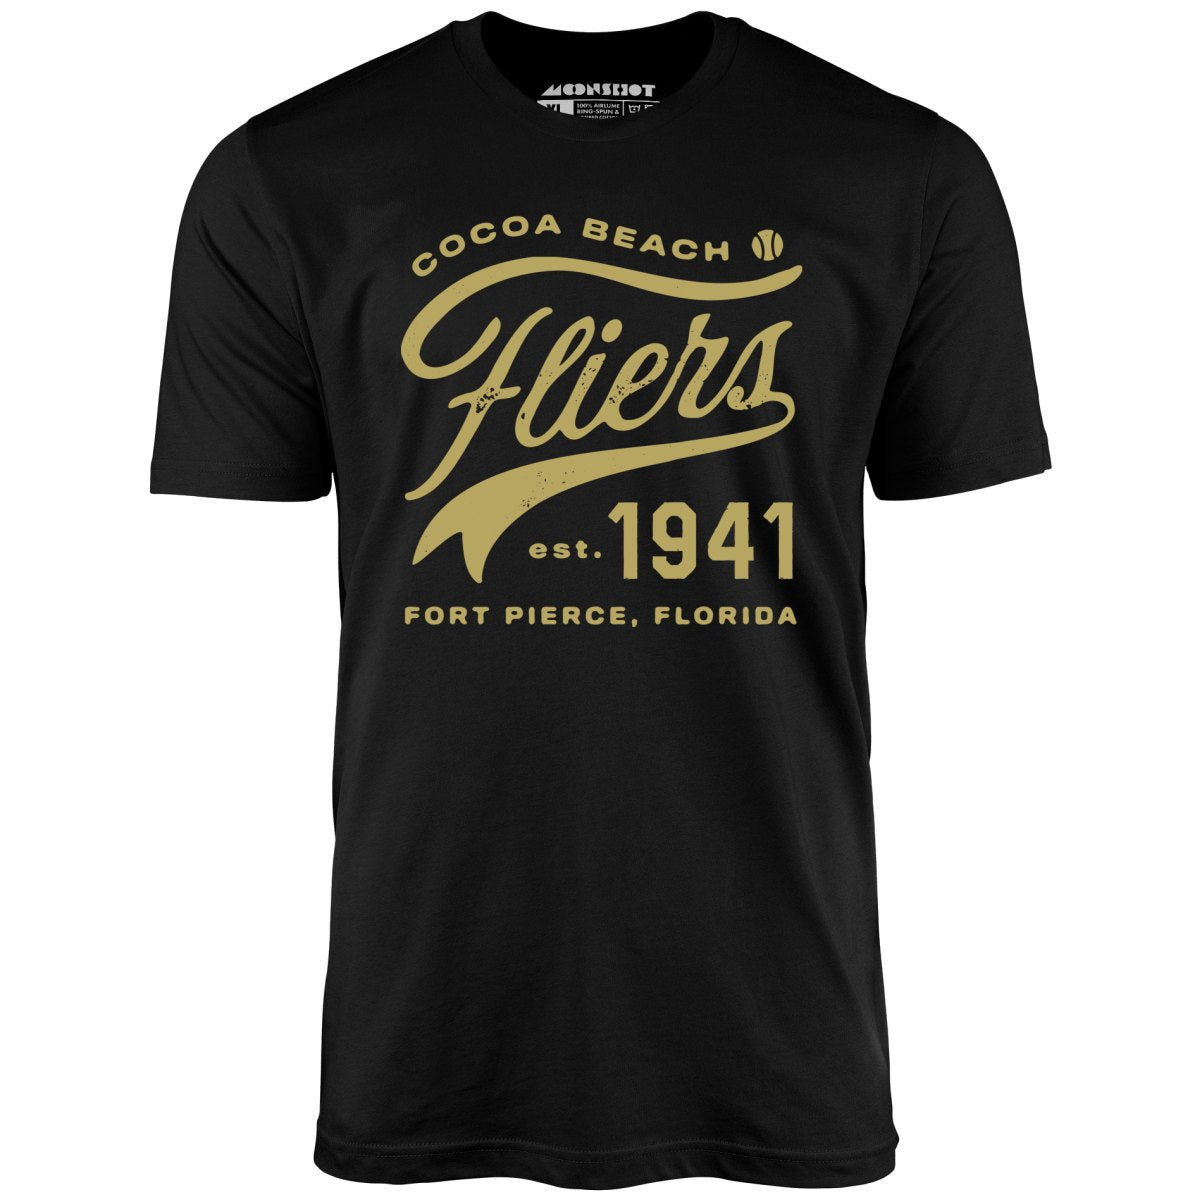 Cocoa Beach Fliers - Florida - Vintage Defunct Baseball Teams - Unisex T-Shirt